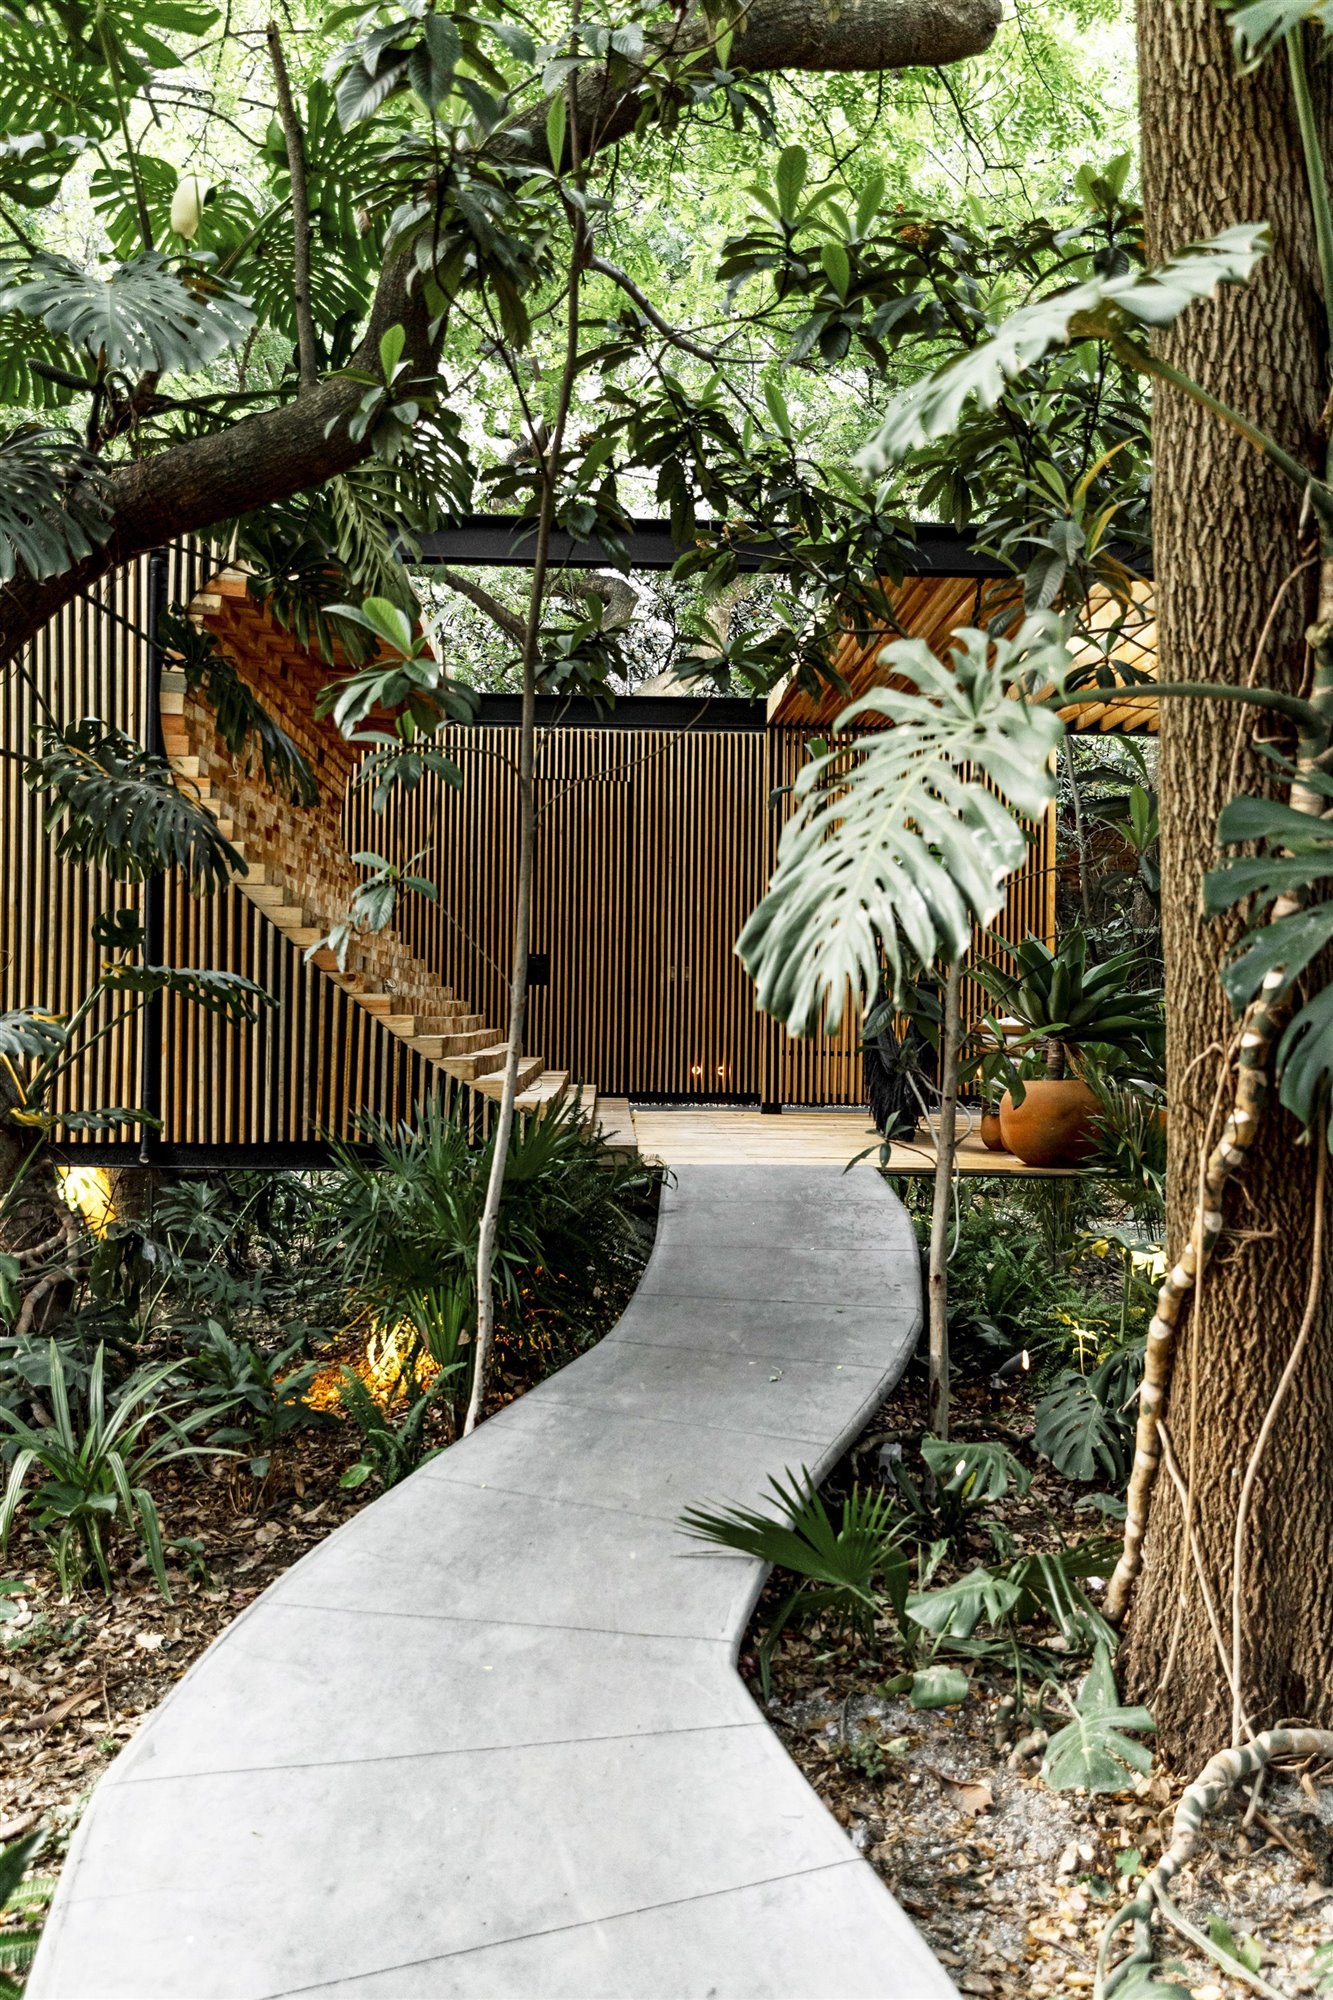 Casa moderna en Mexico rodeada de vegetacion en la selva camino de entrada